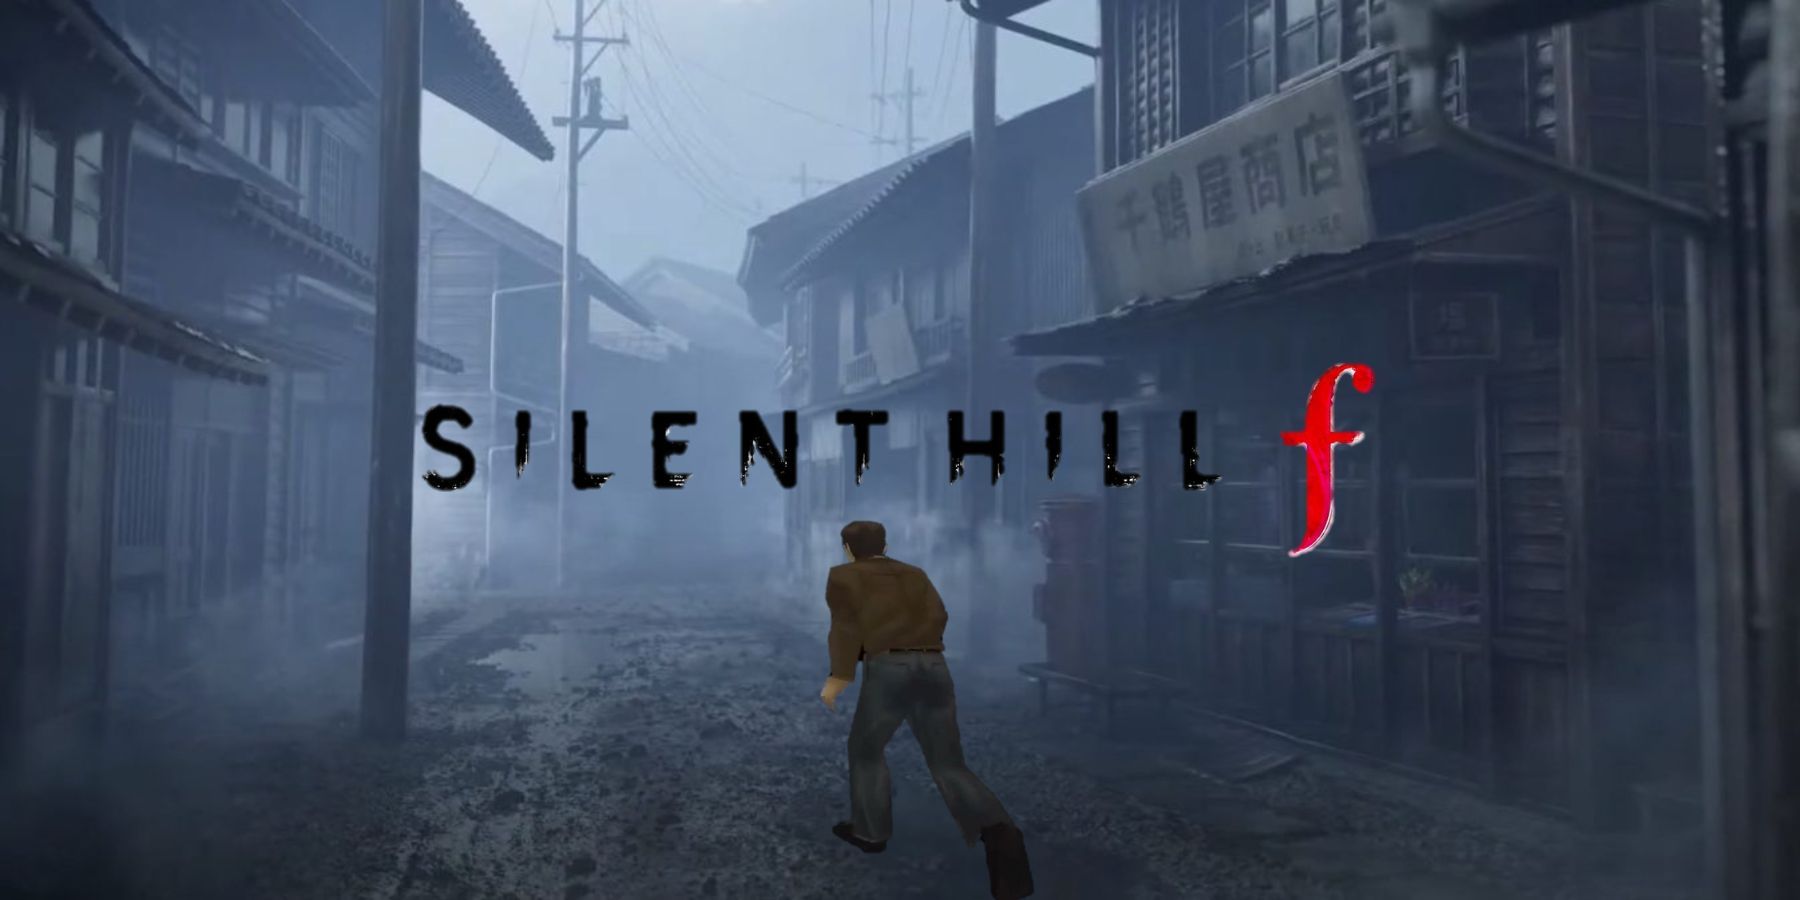 Silent Hill f rural Japan 1960s setting